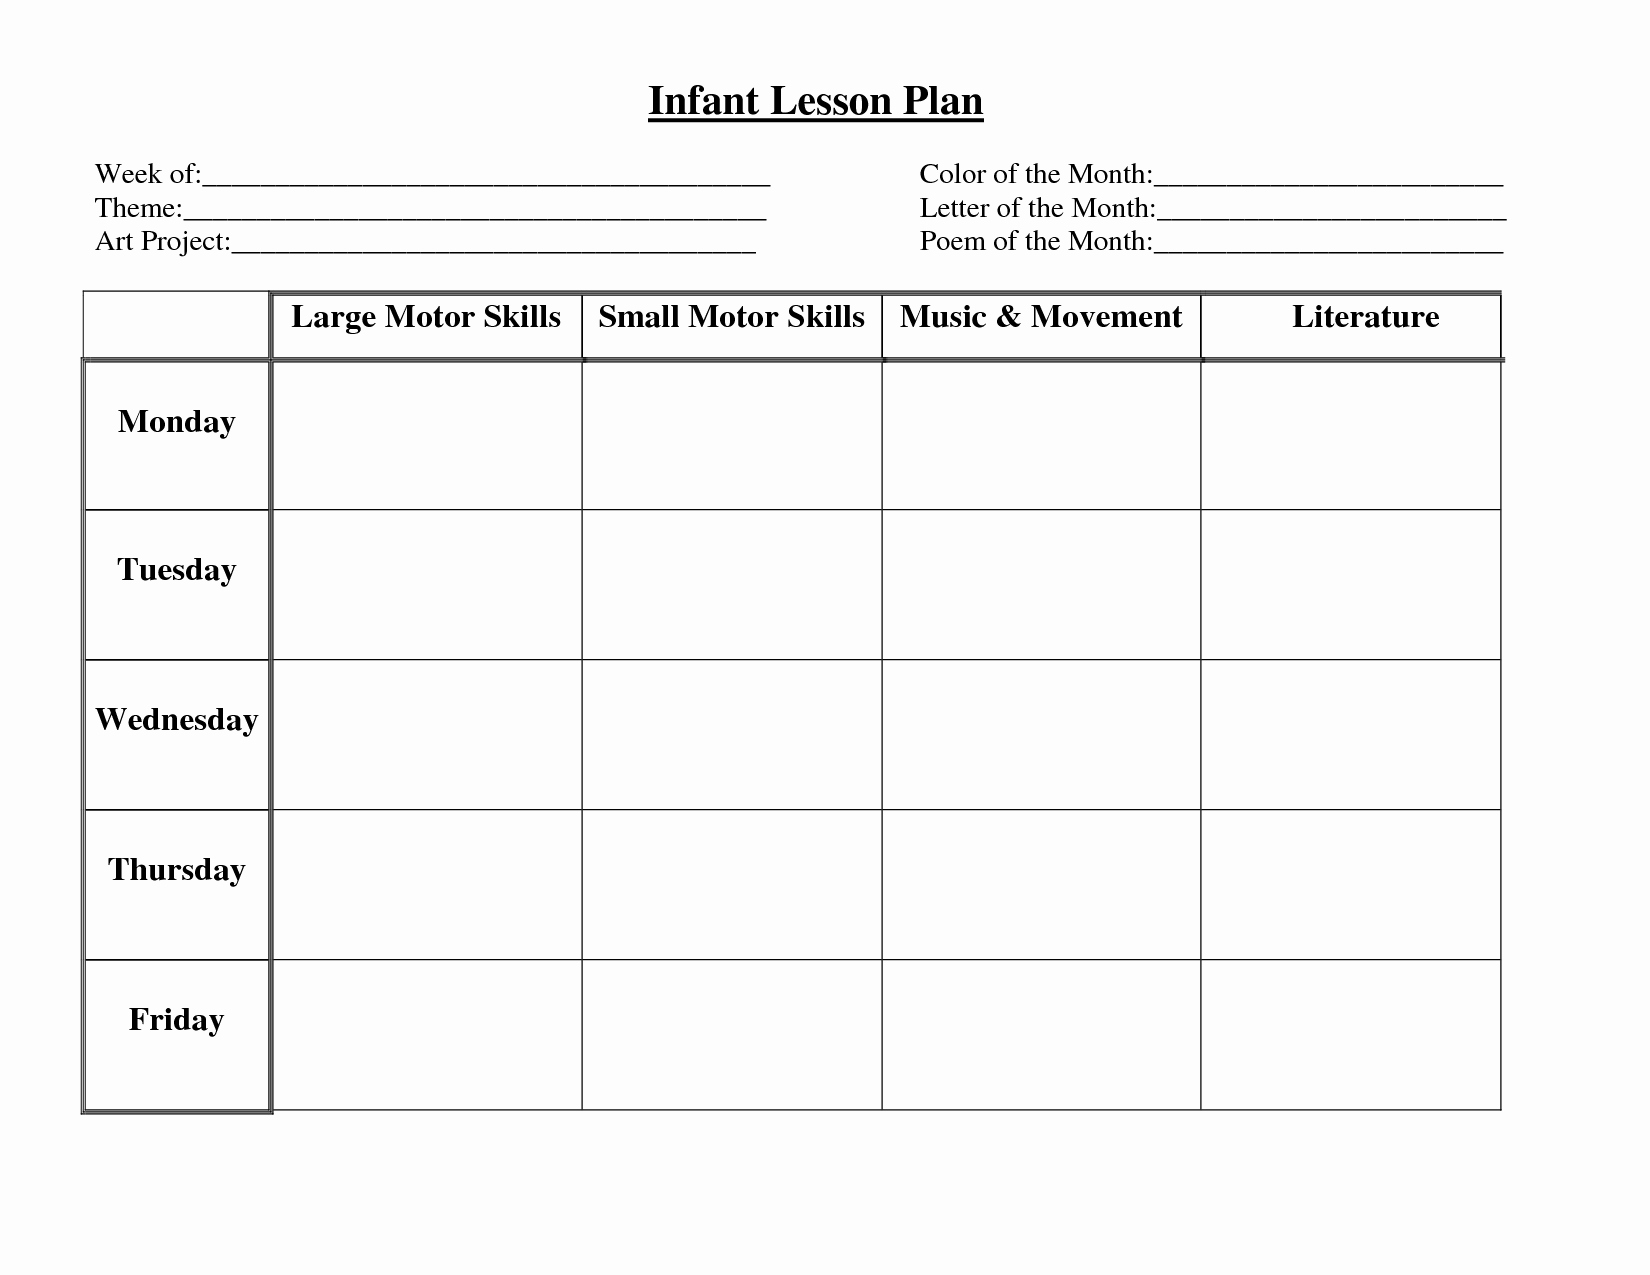 Lesson Plans Templates for toddlers Unique Infant Blank Lesson Plan Sheets